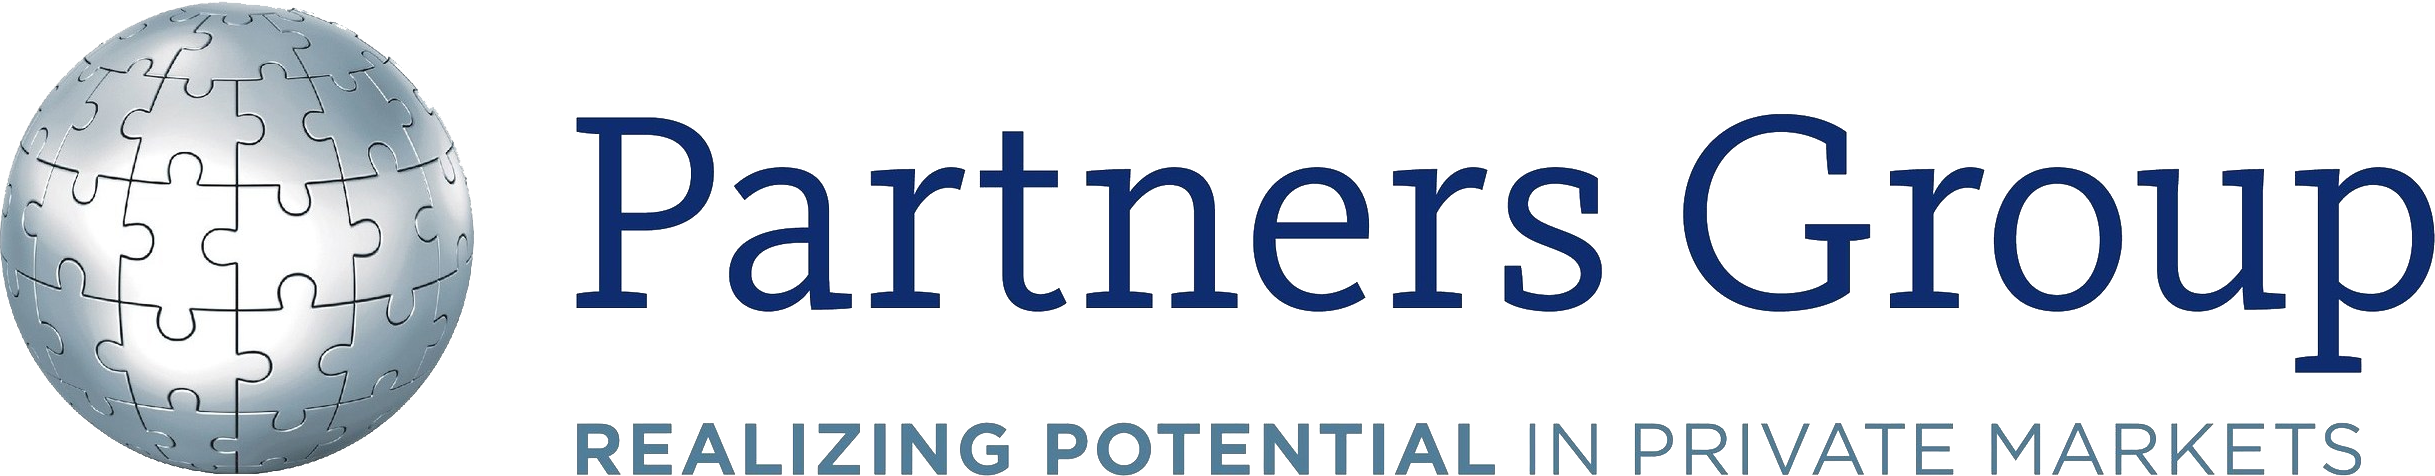 Partners Group logo large (transparent PNG)